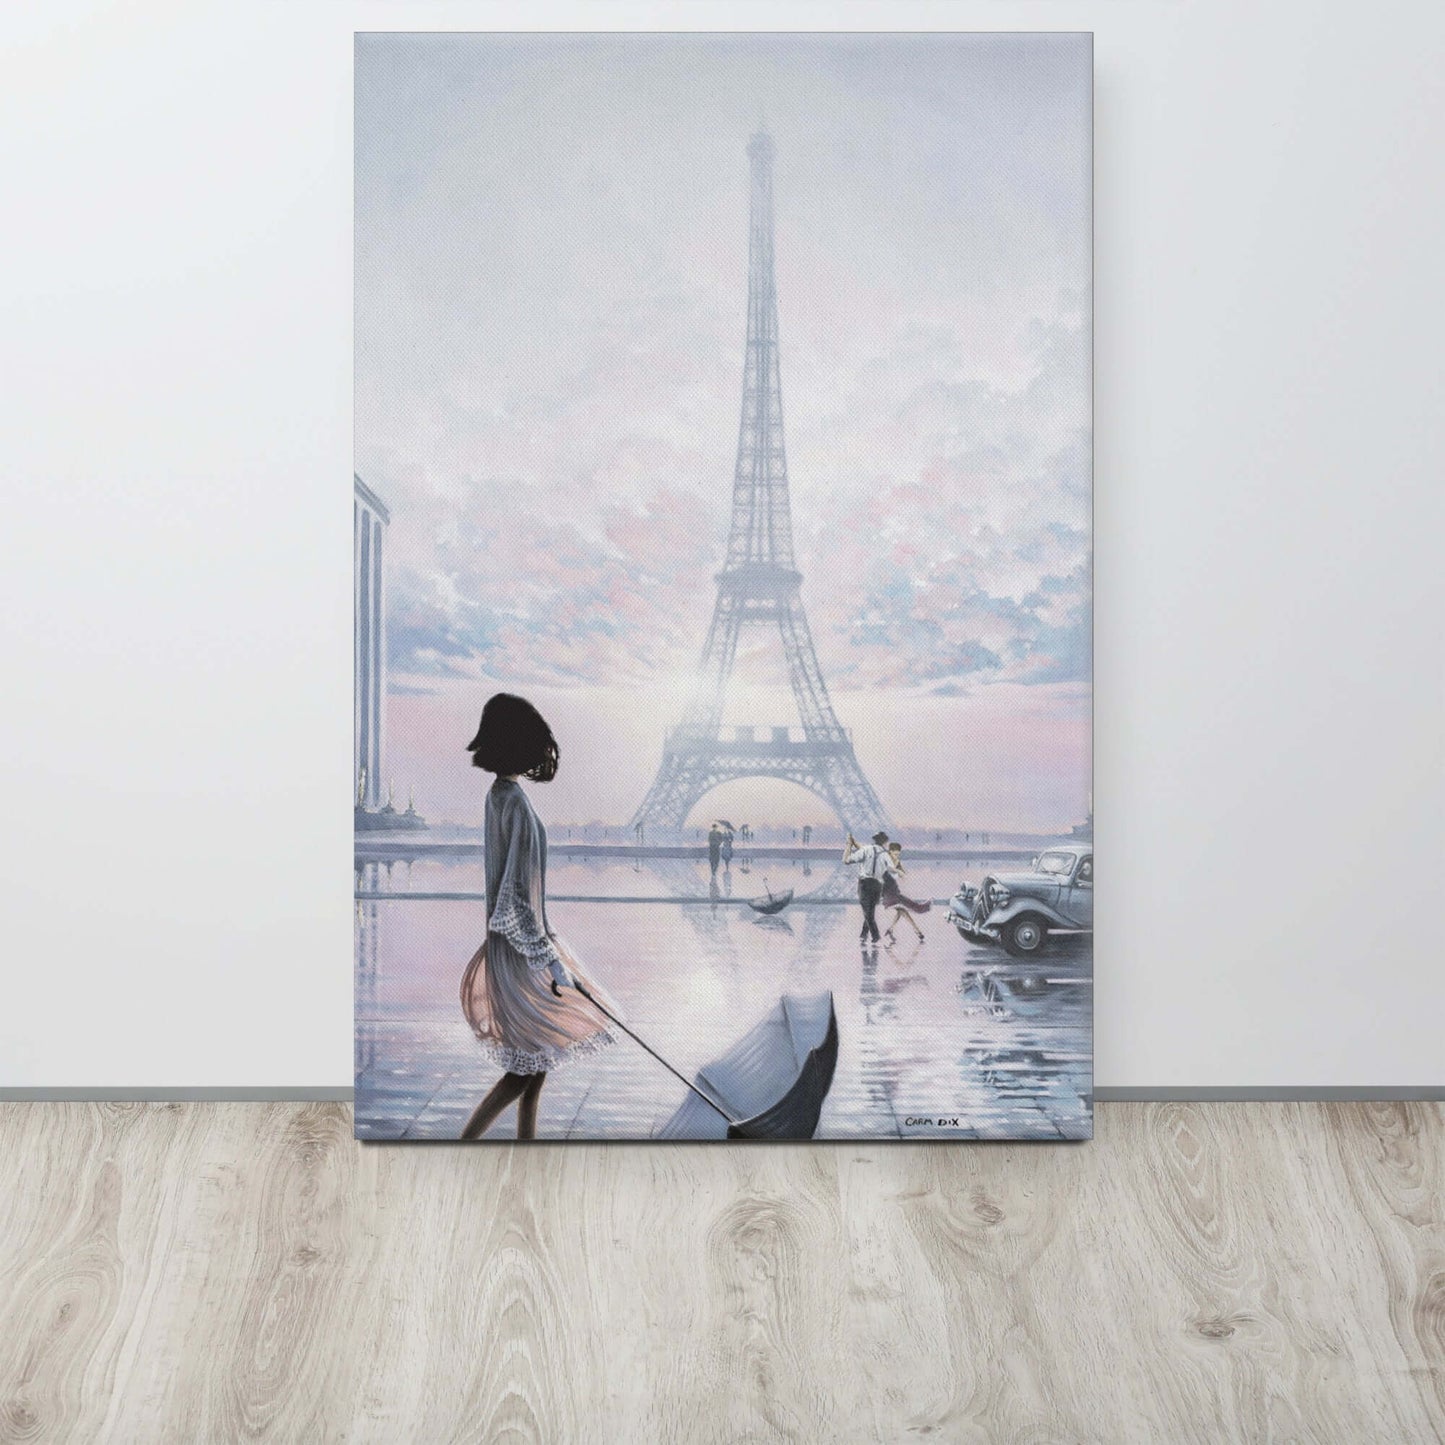 Lost Moment in Paris 24x36" canvas art print by artist Carm Dix